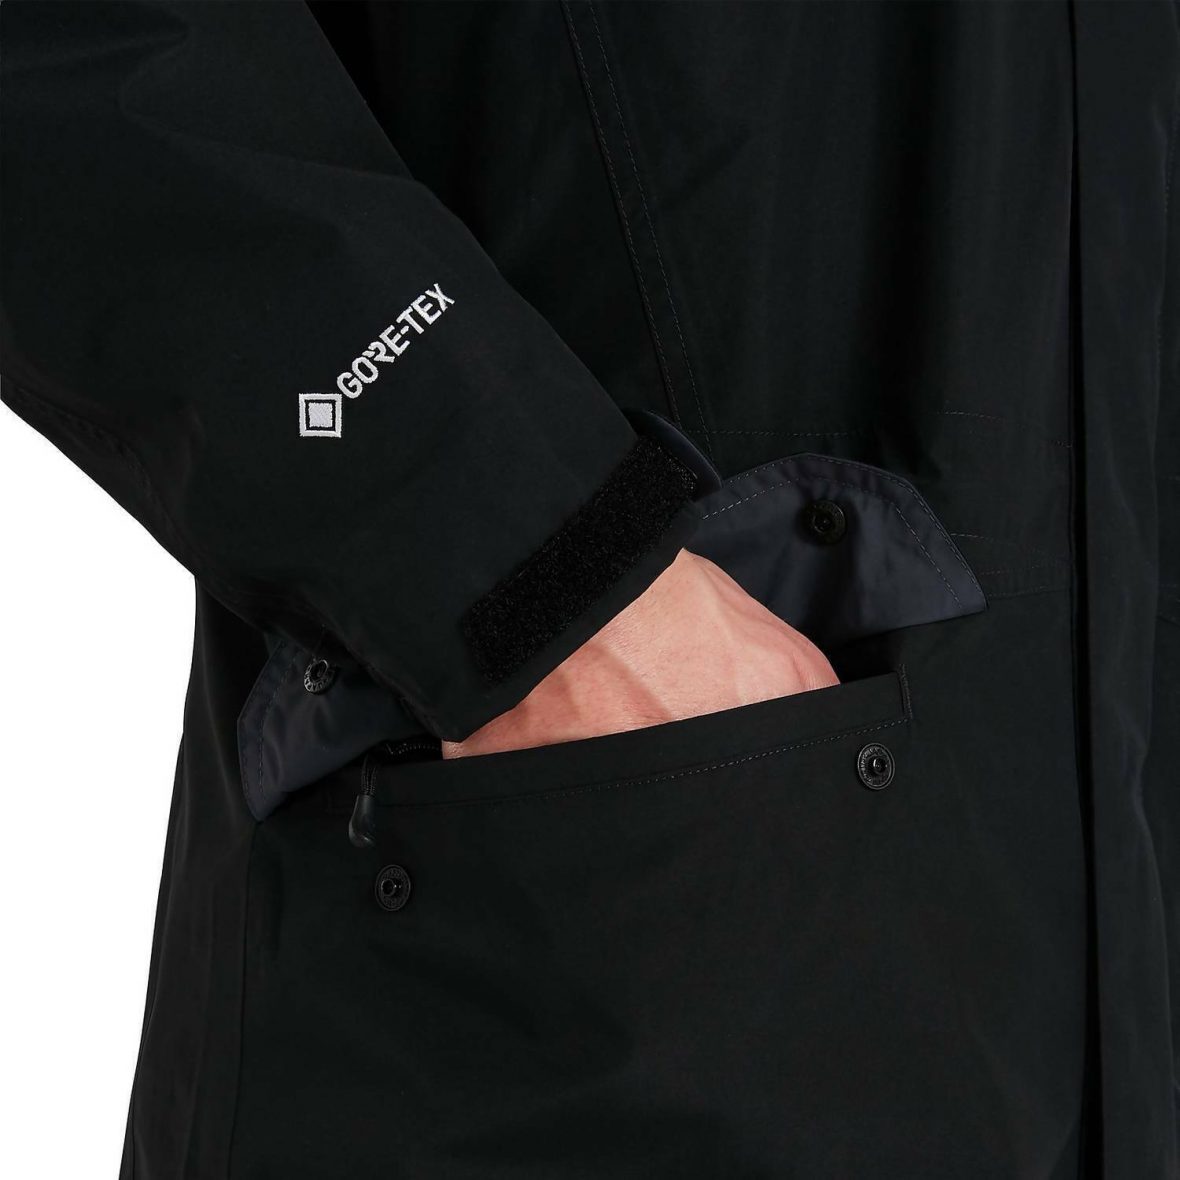 Berghaus 421016bp6 Men’s Cornice InterActive Jacket – Black f